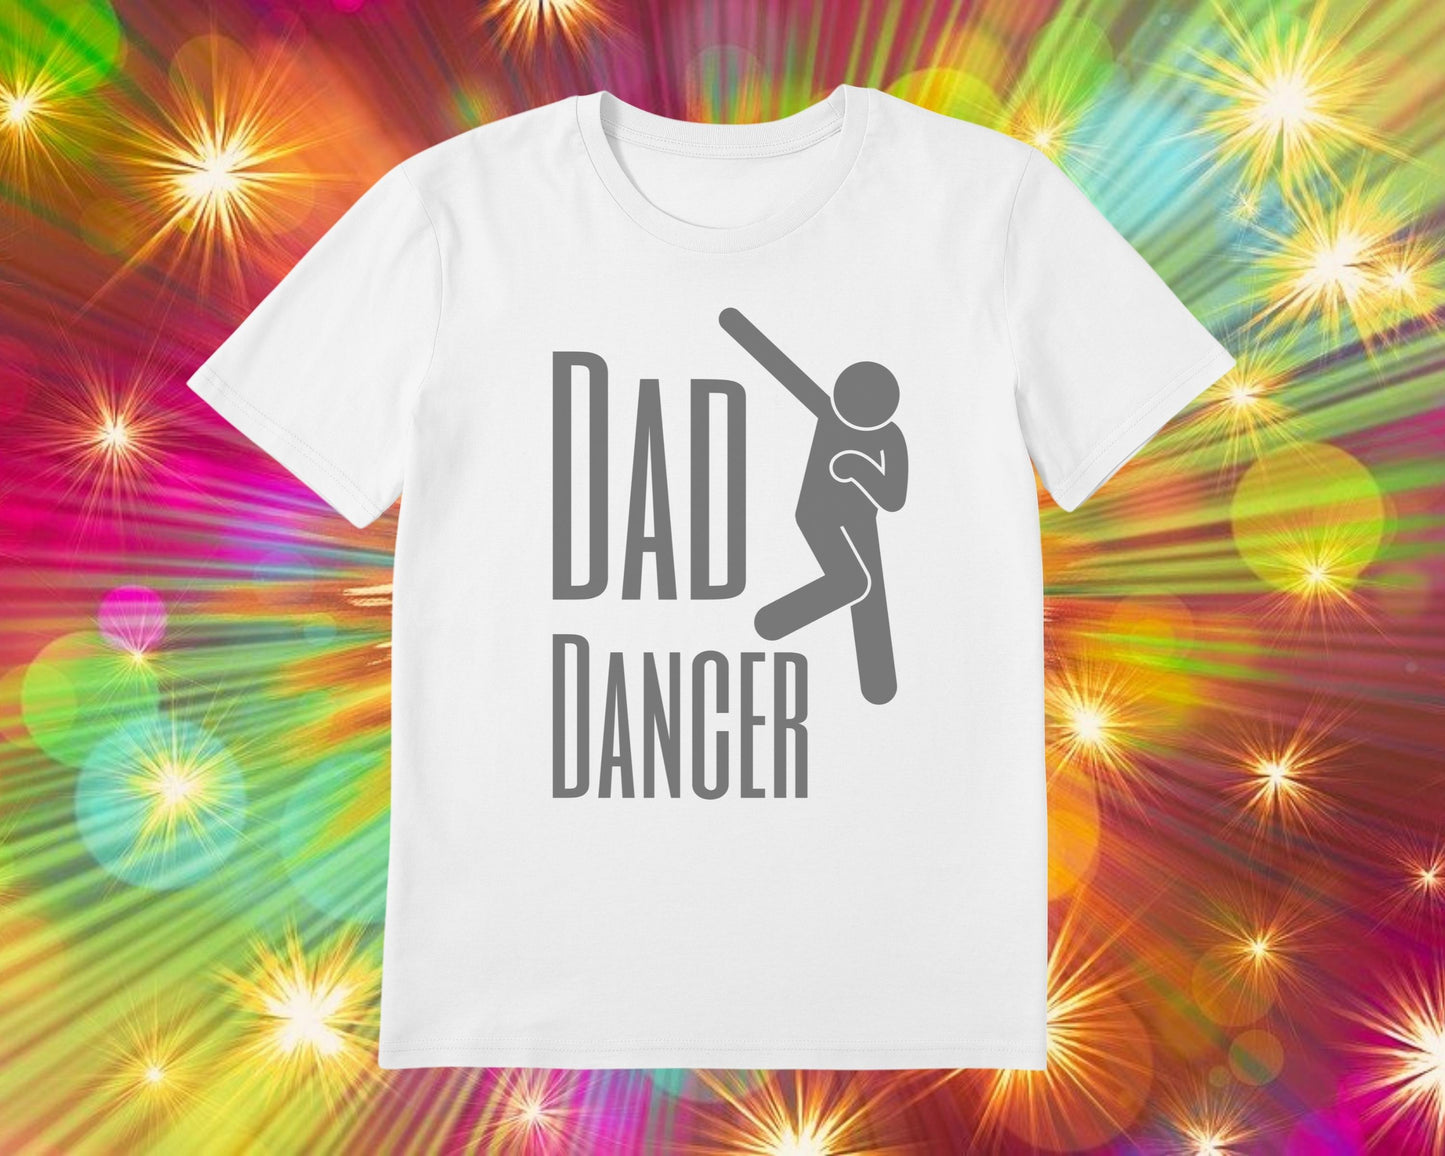 Dad Dancer: Part 1